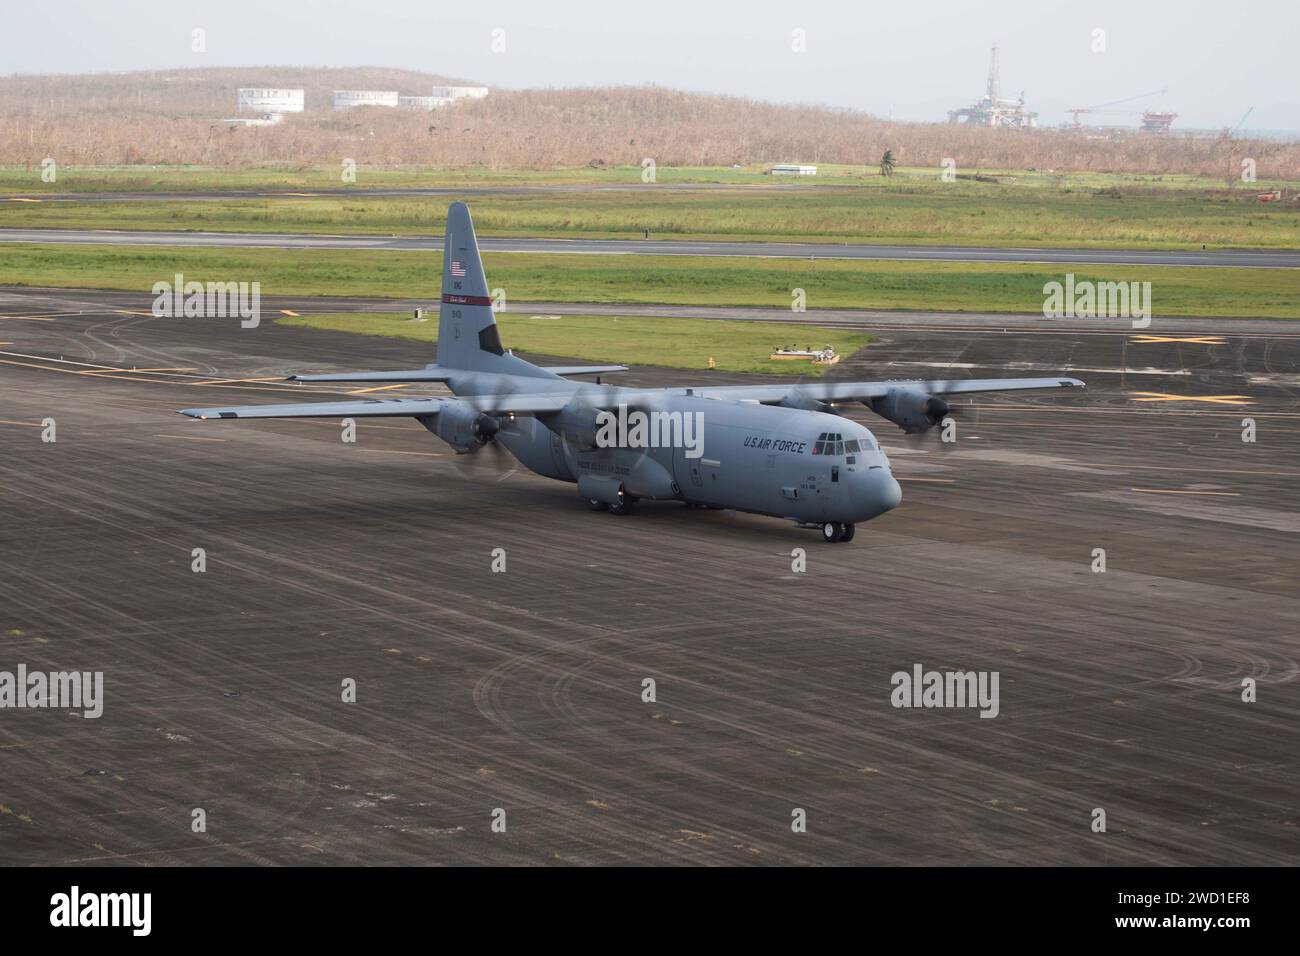 A U.S. Air Force C-5M Super Galaxy transport aircraft landing in Ceiba, Puerto Rico Stock Photo